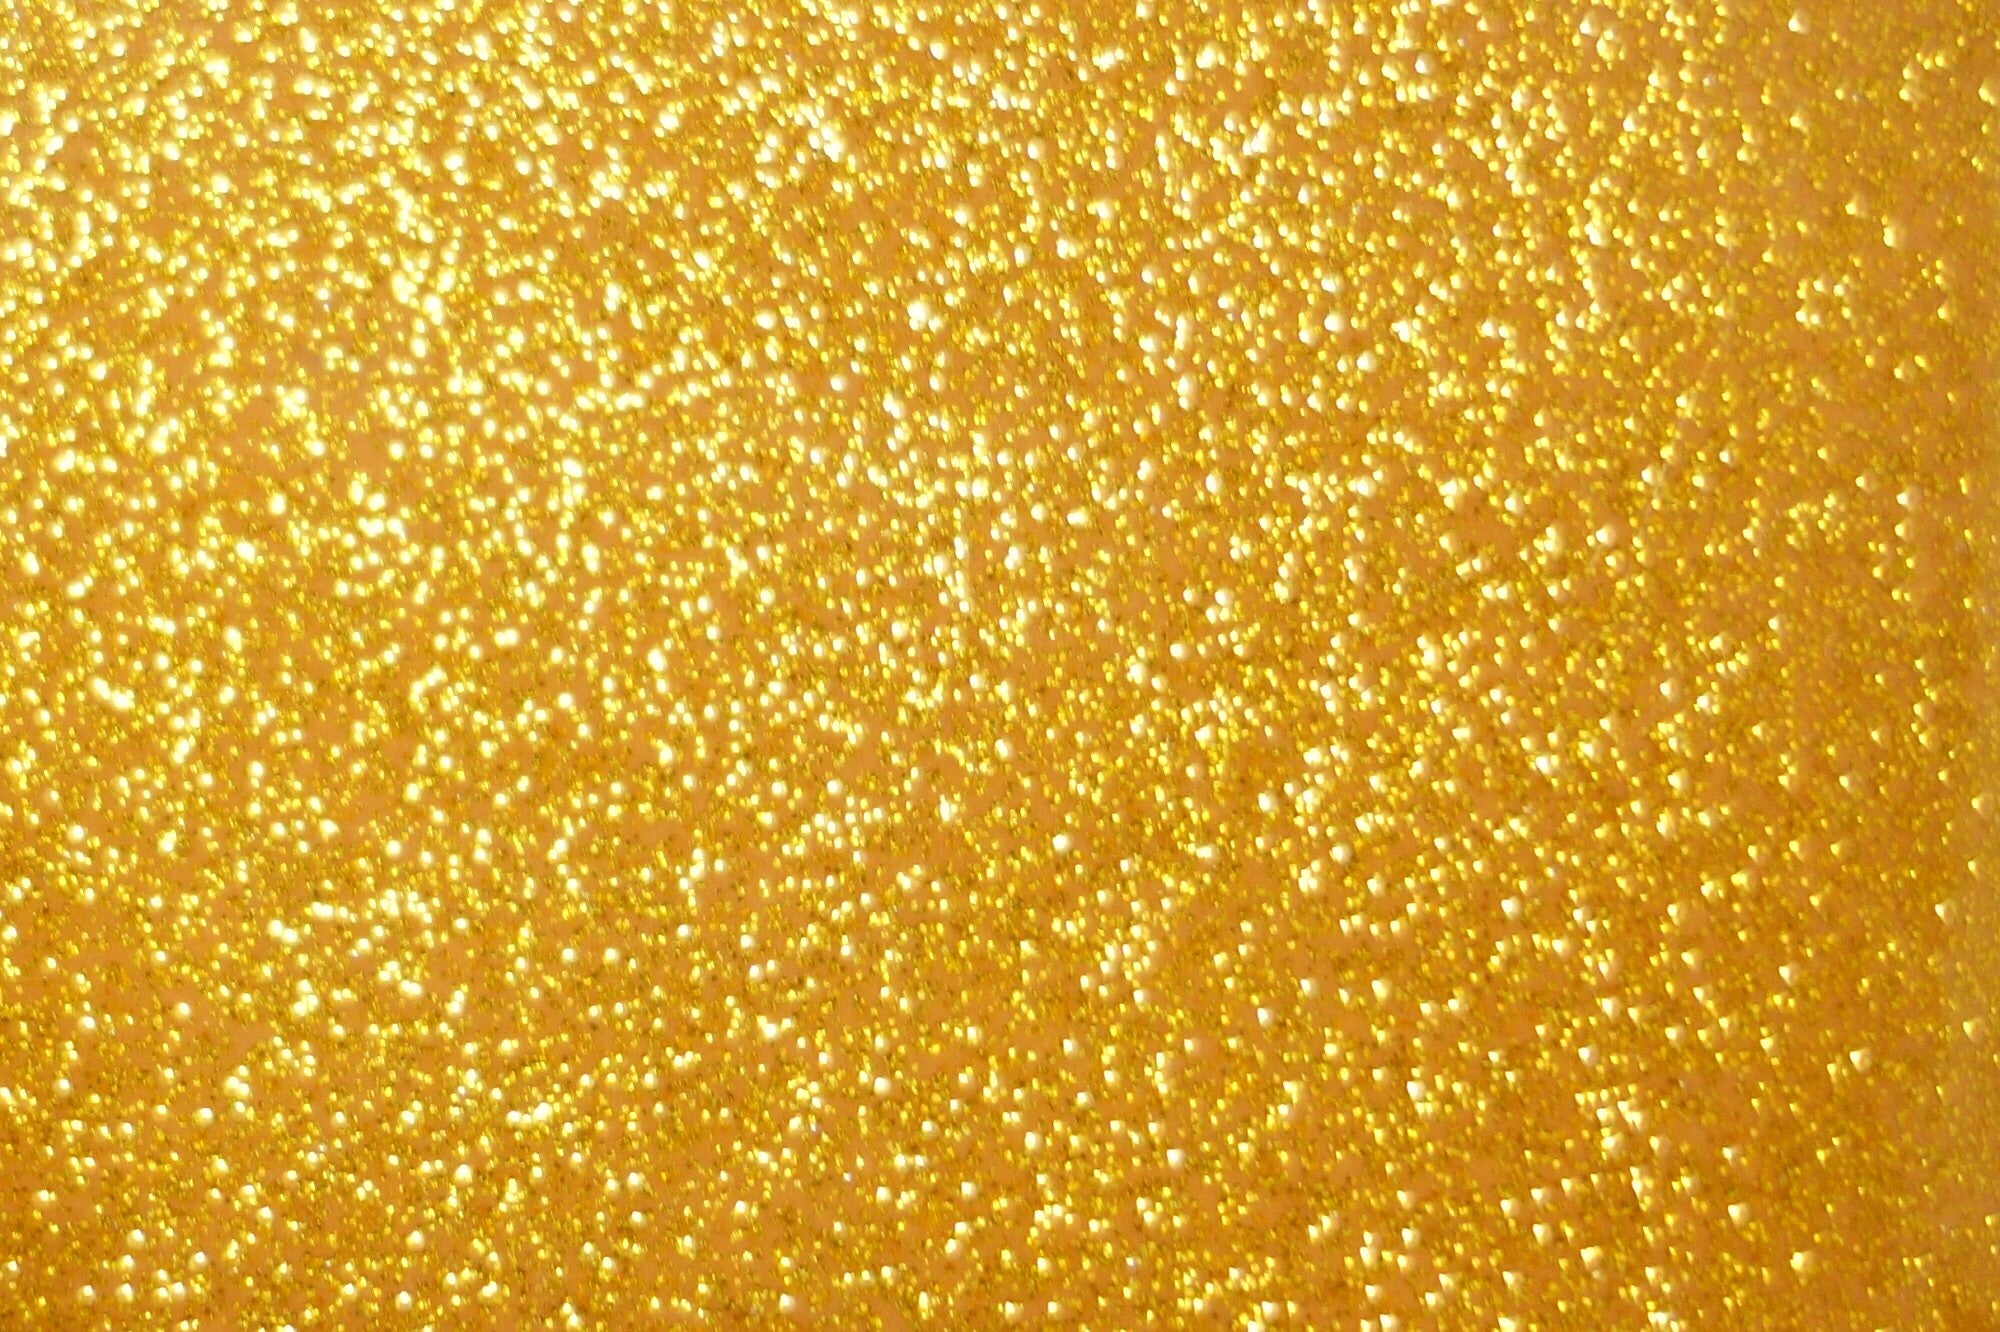 20x12 Yellow Gold Glitter Heat Transfer Vinyl stahls Glitter Flake